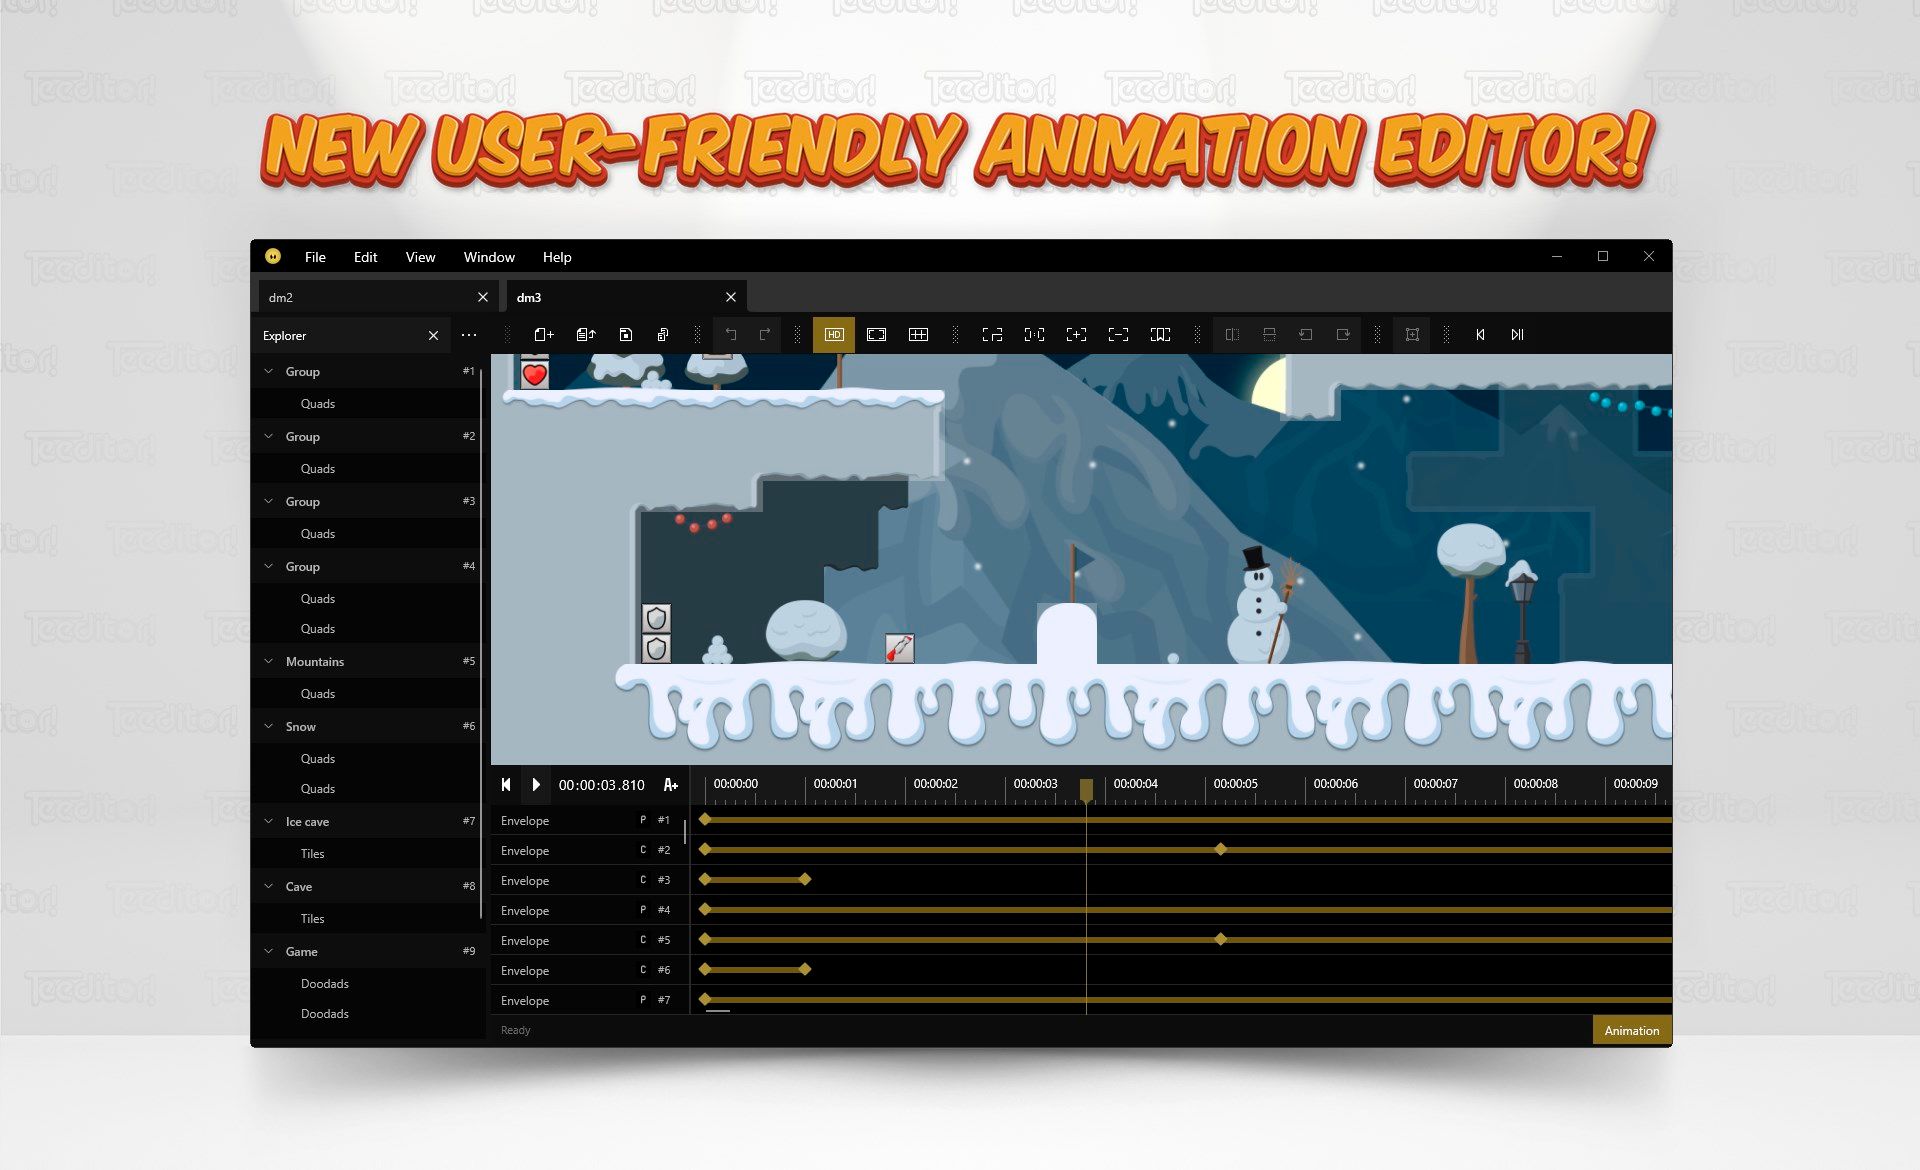 New user-friendly animation editor!